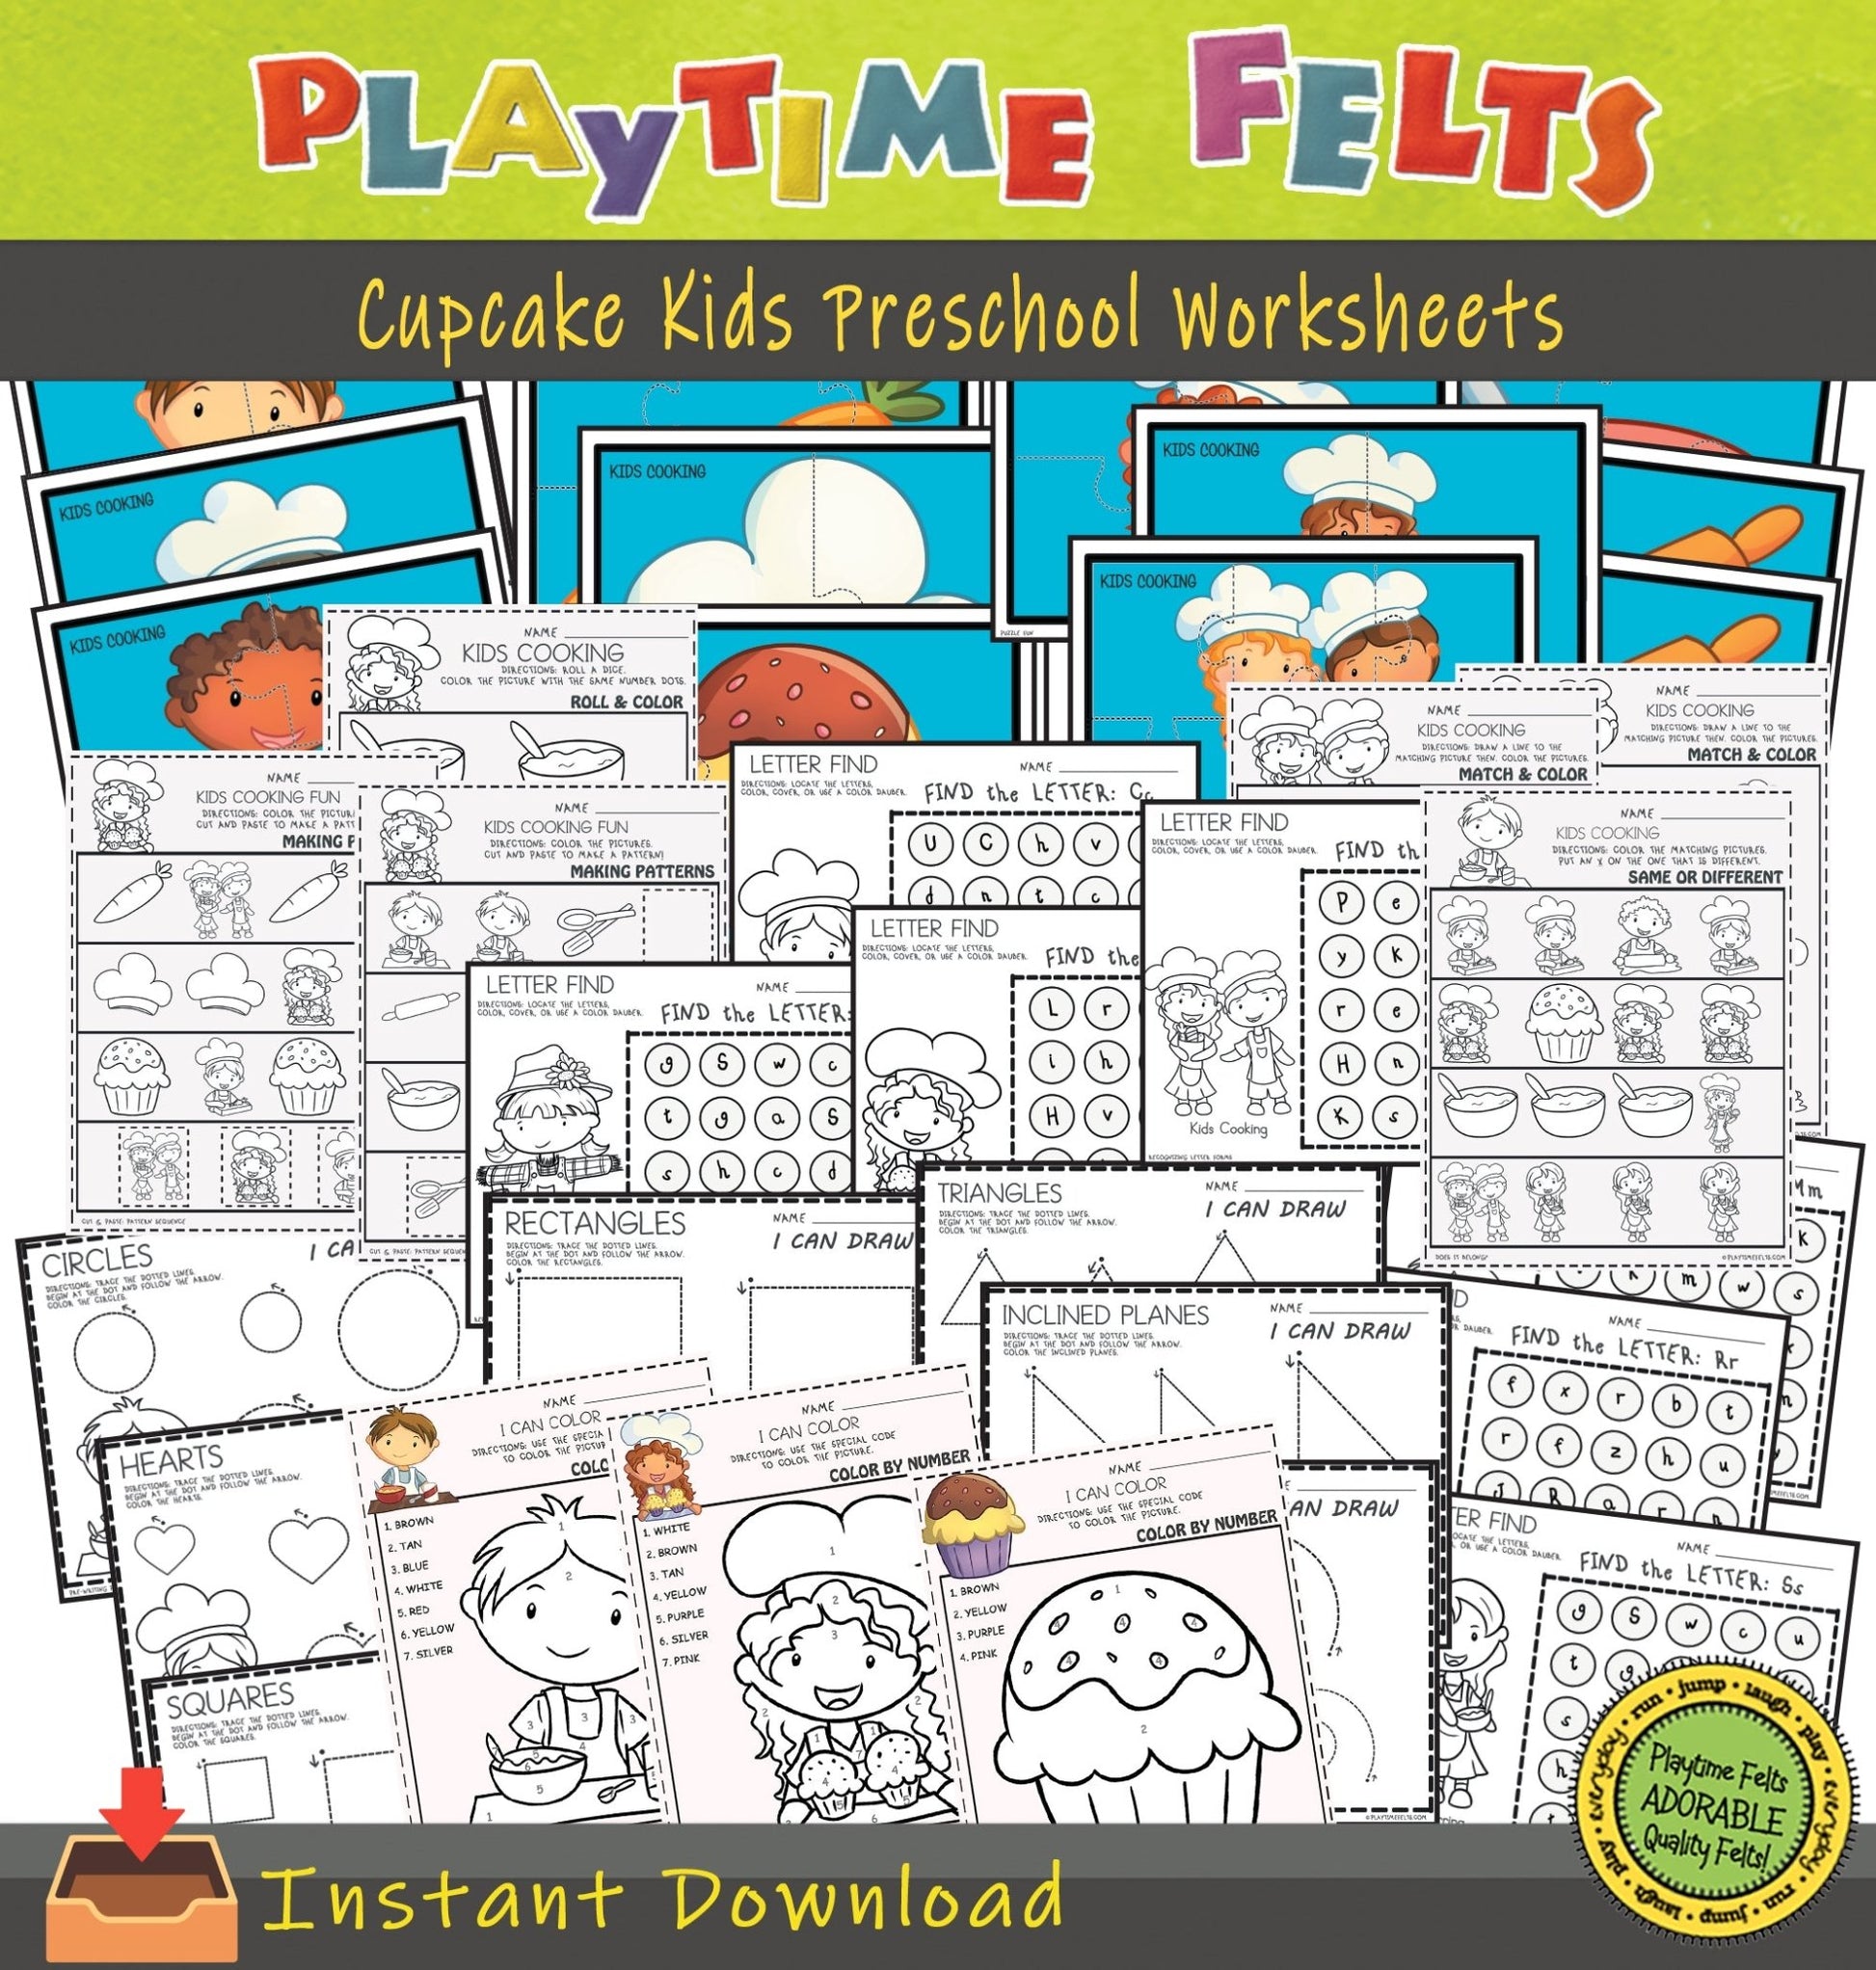 Cupcake Kids Preschool Printable Worksheets INSTANT 📥 Download - Preschool Activity Sheets Playtime Felts